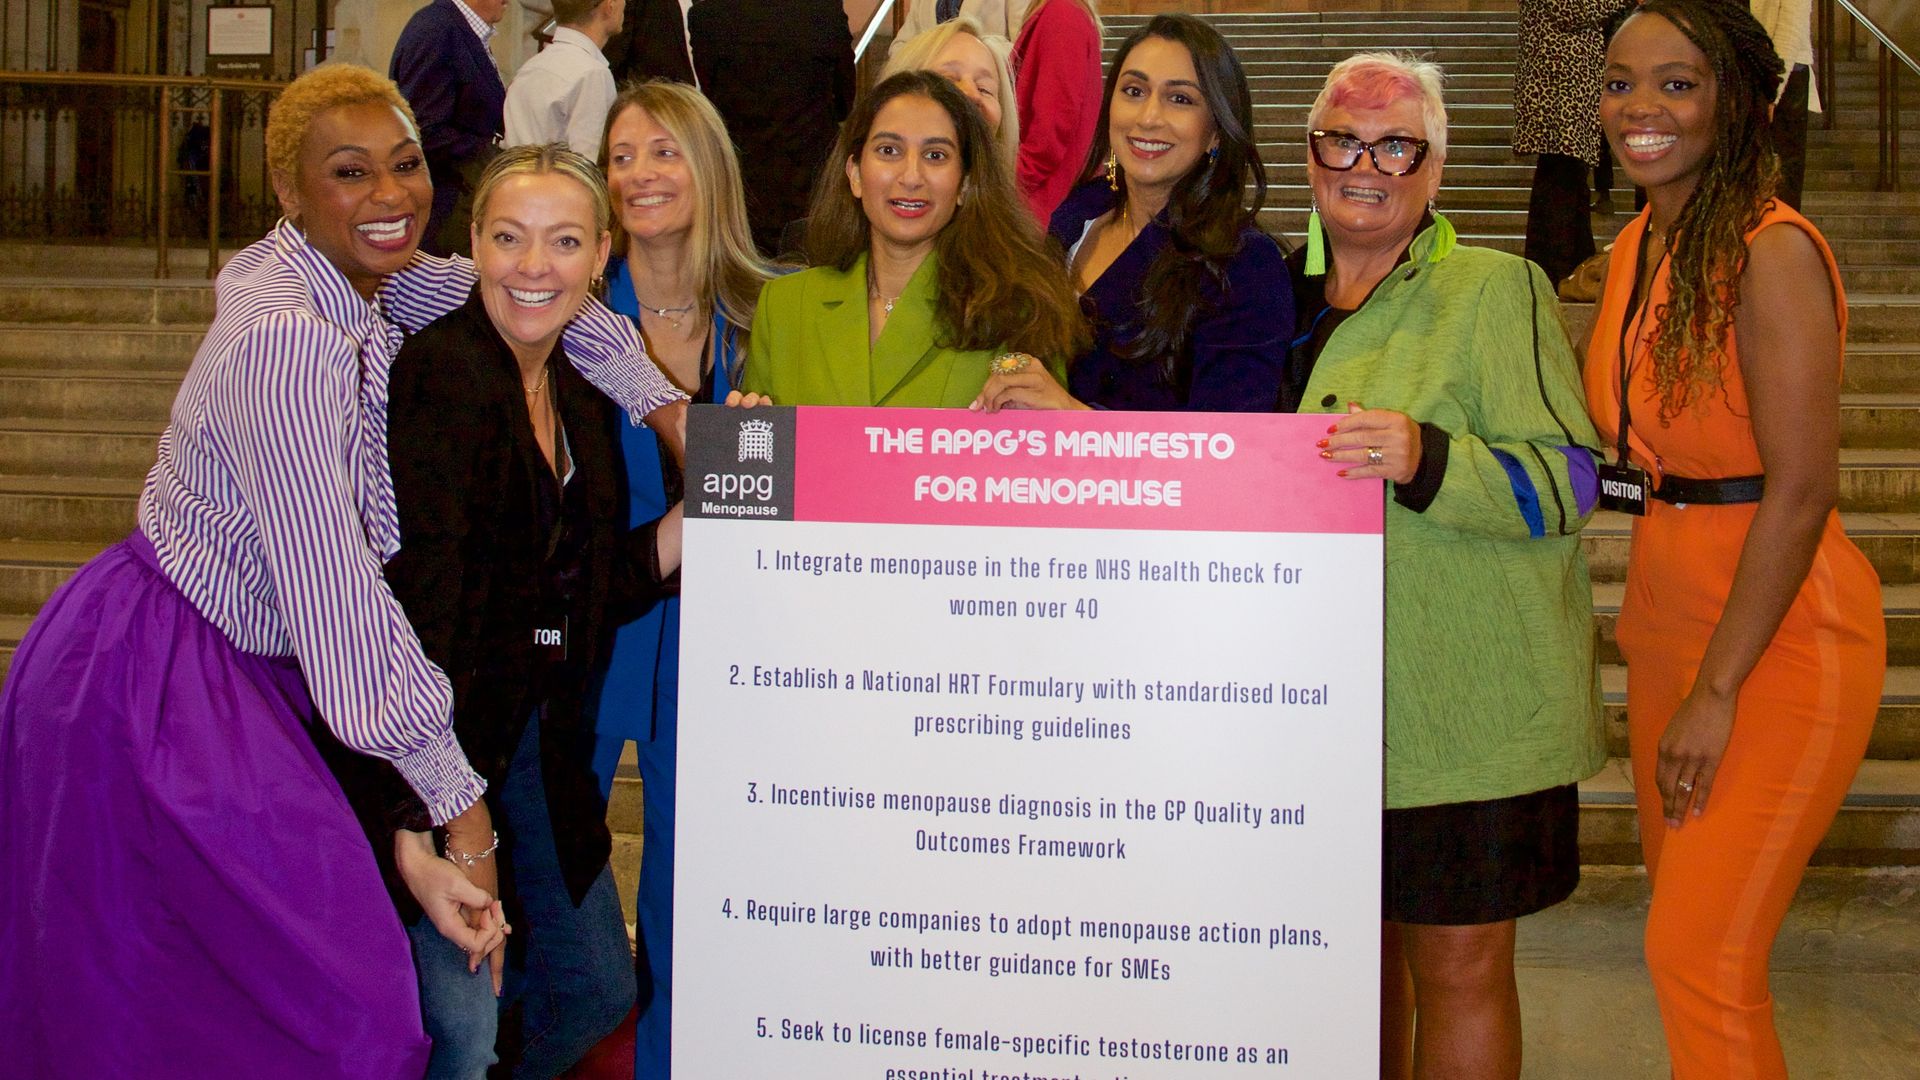 Celebrating the new Manifesto for Menopause